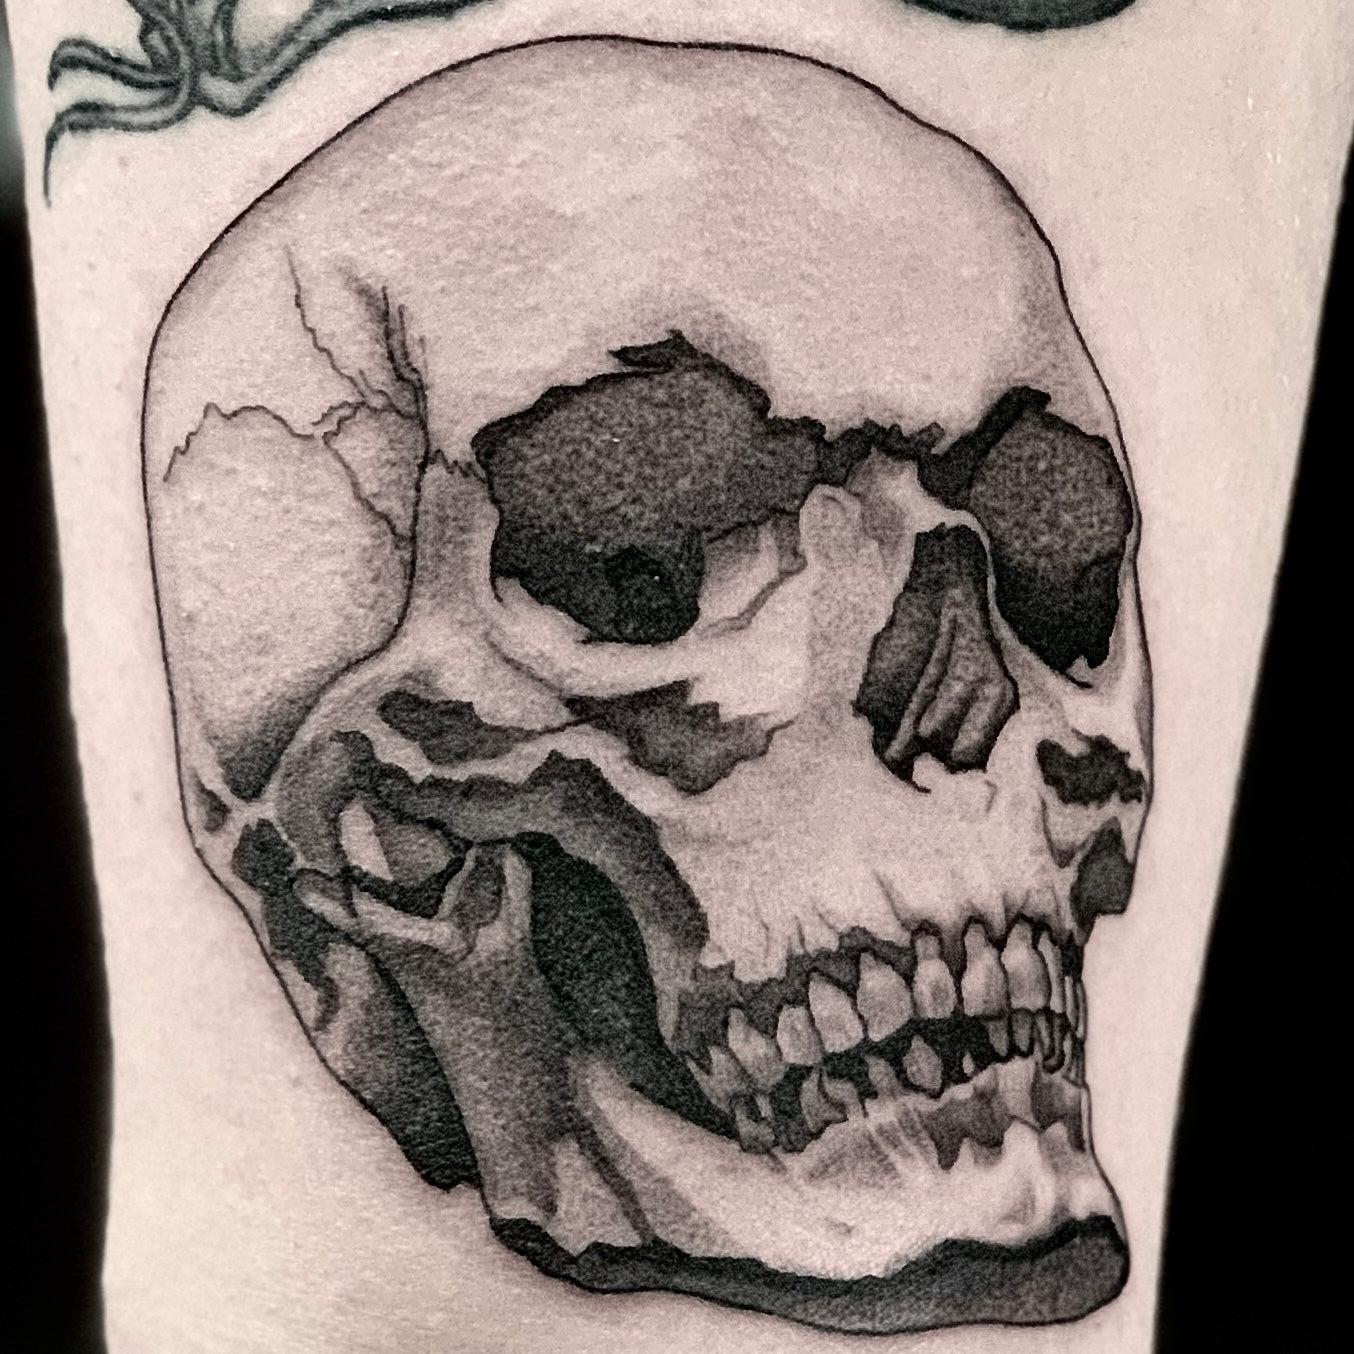 Illustrative realism skull tattoo by Danny Schreiber